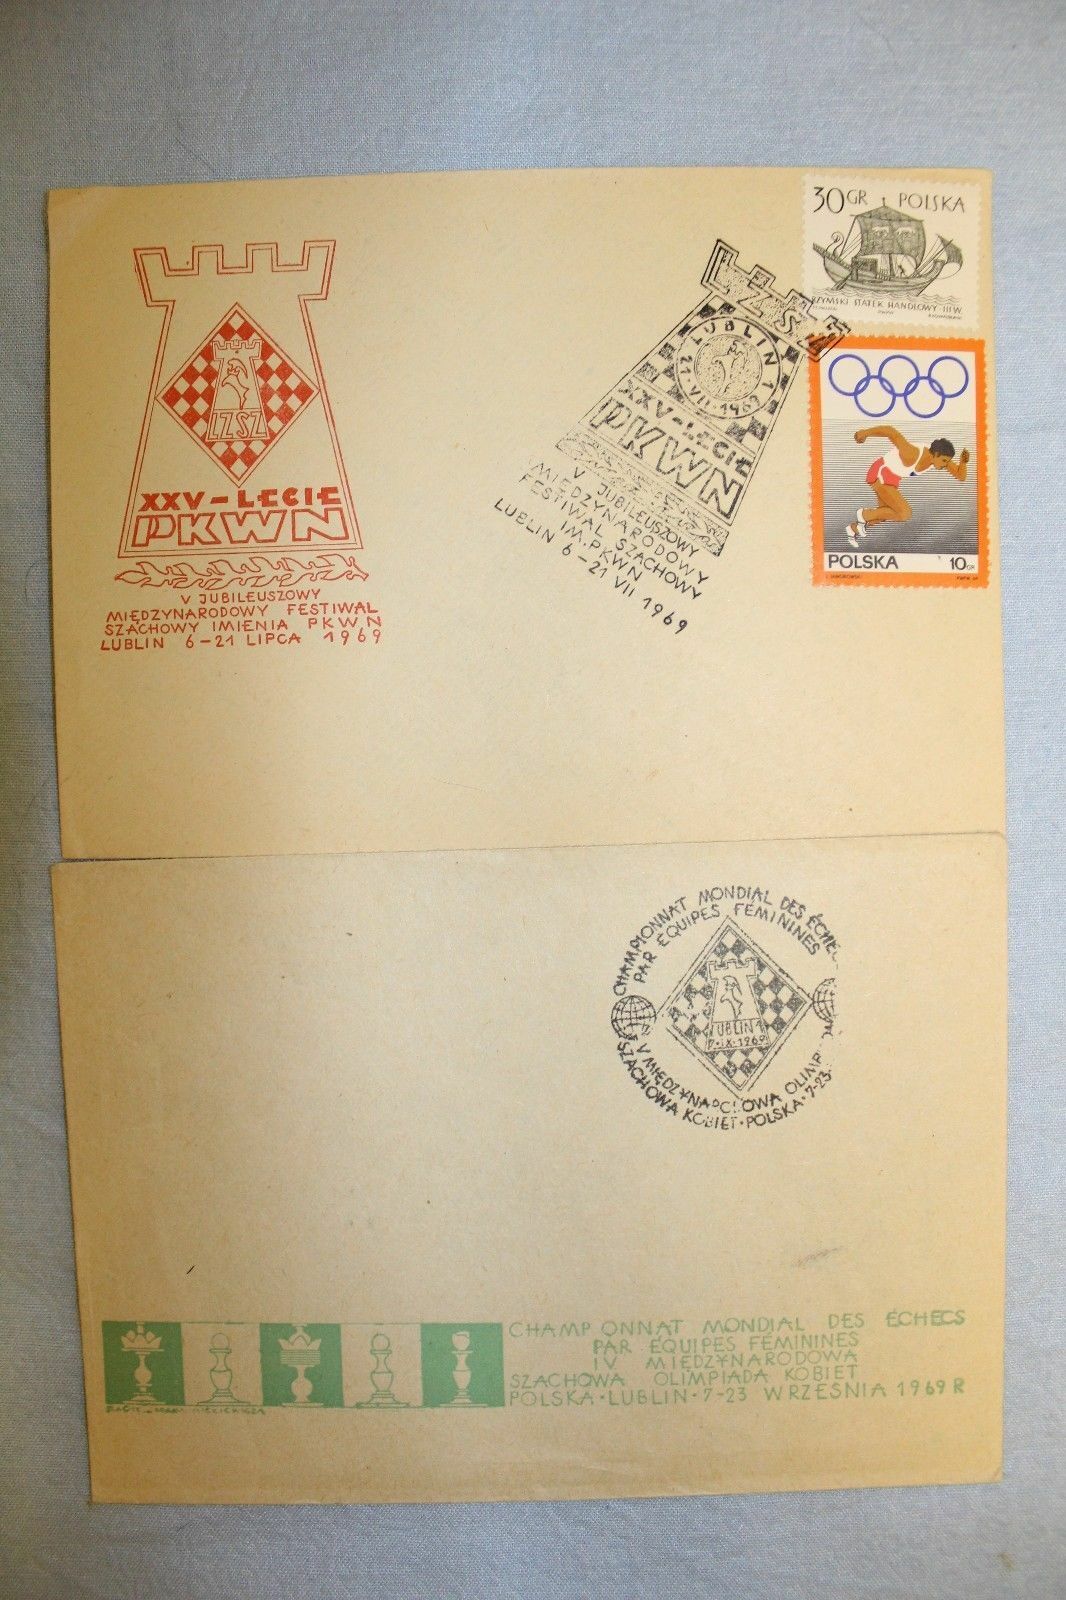 10746.6 Polish Chess Envelopes. From the collection of Zatulovskaya. 1969